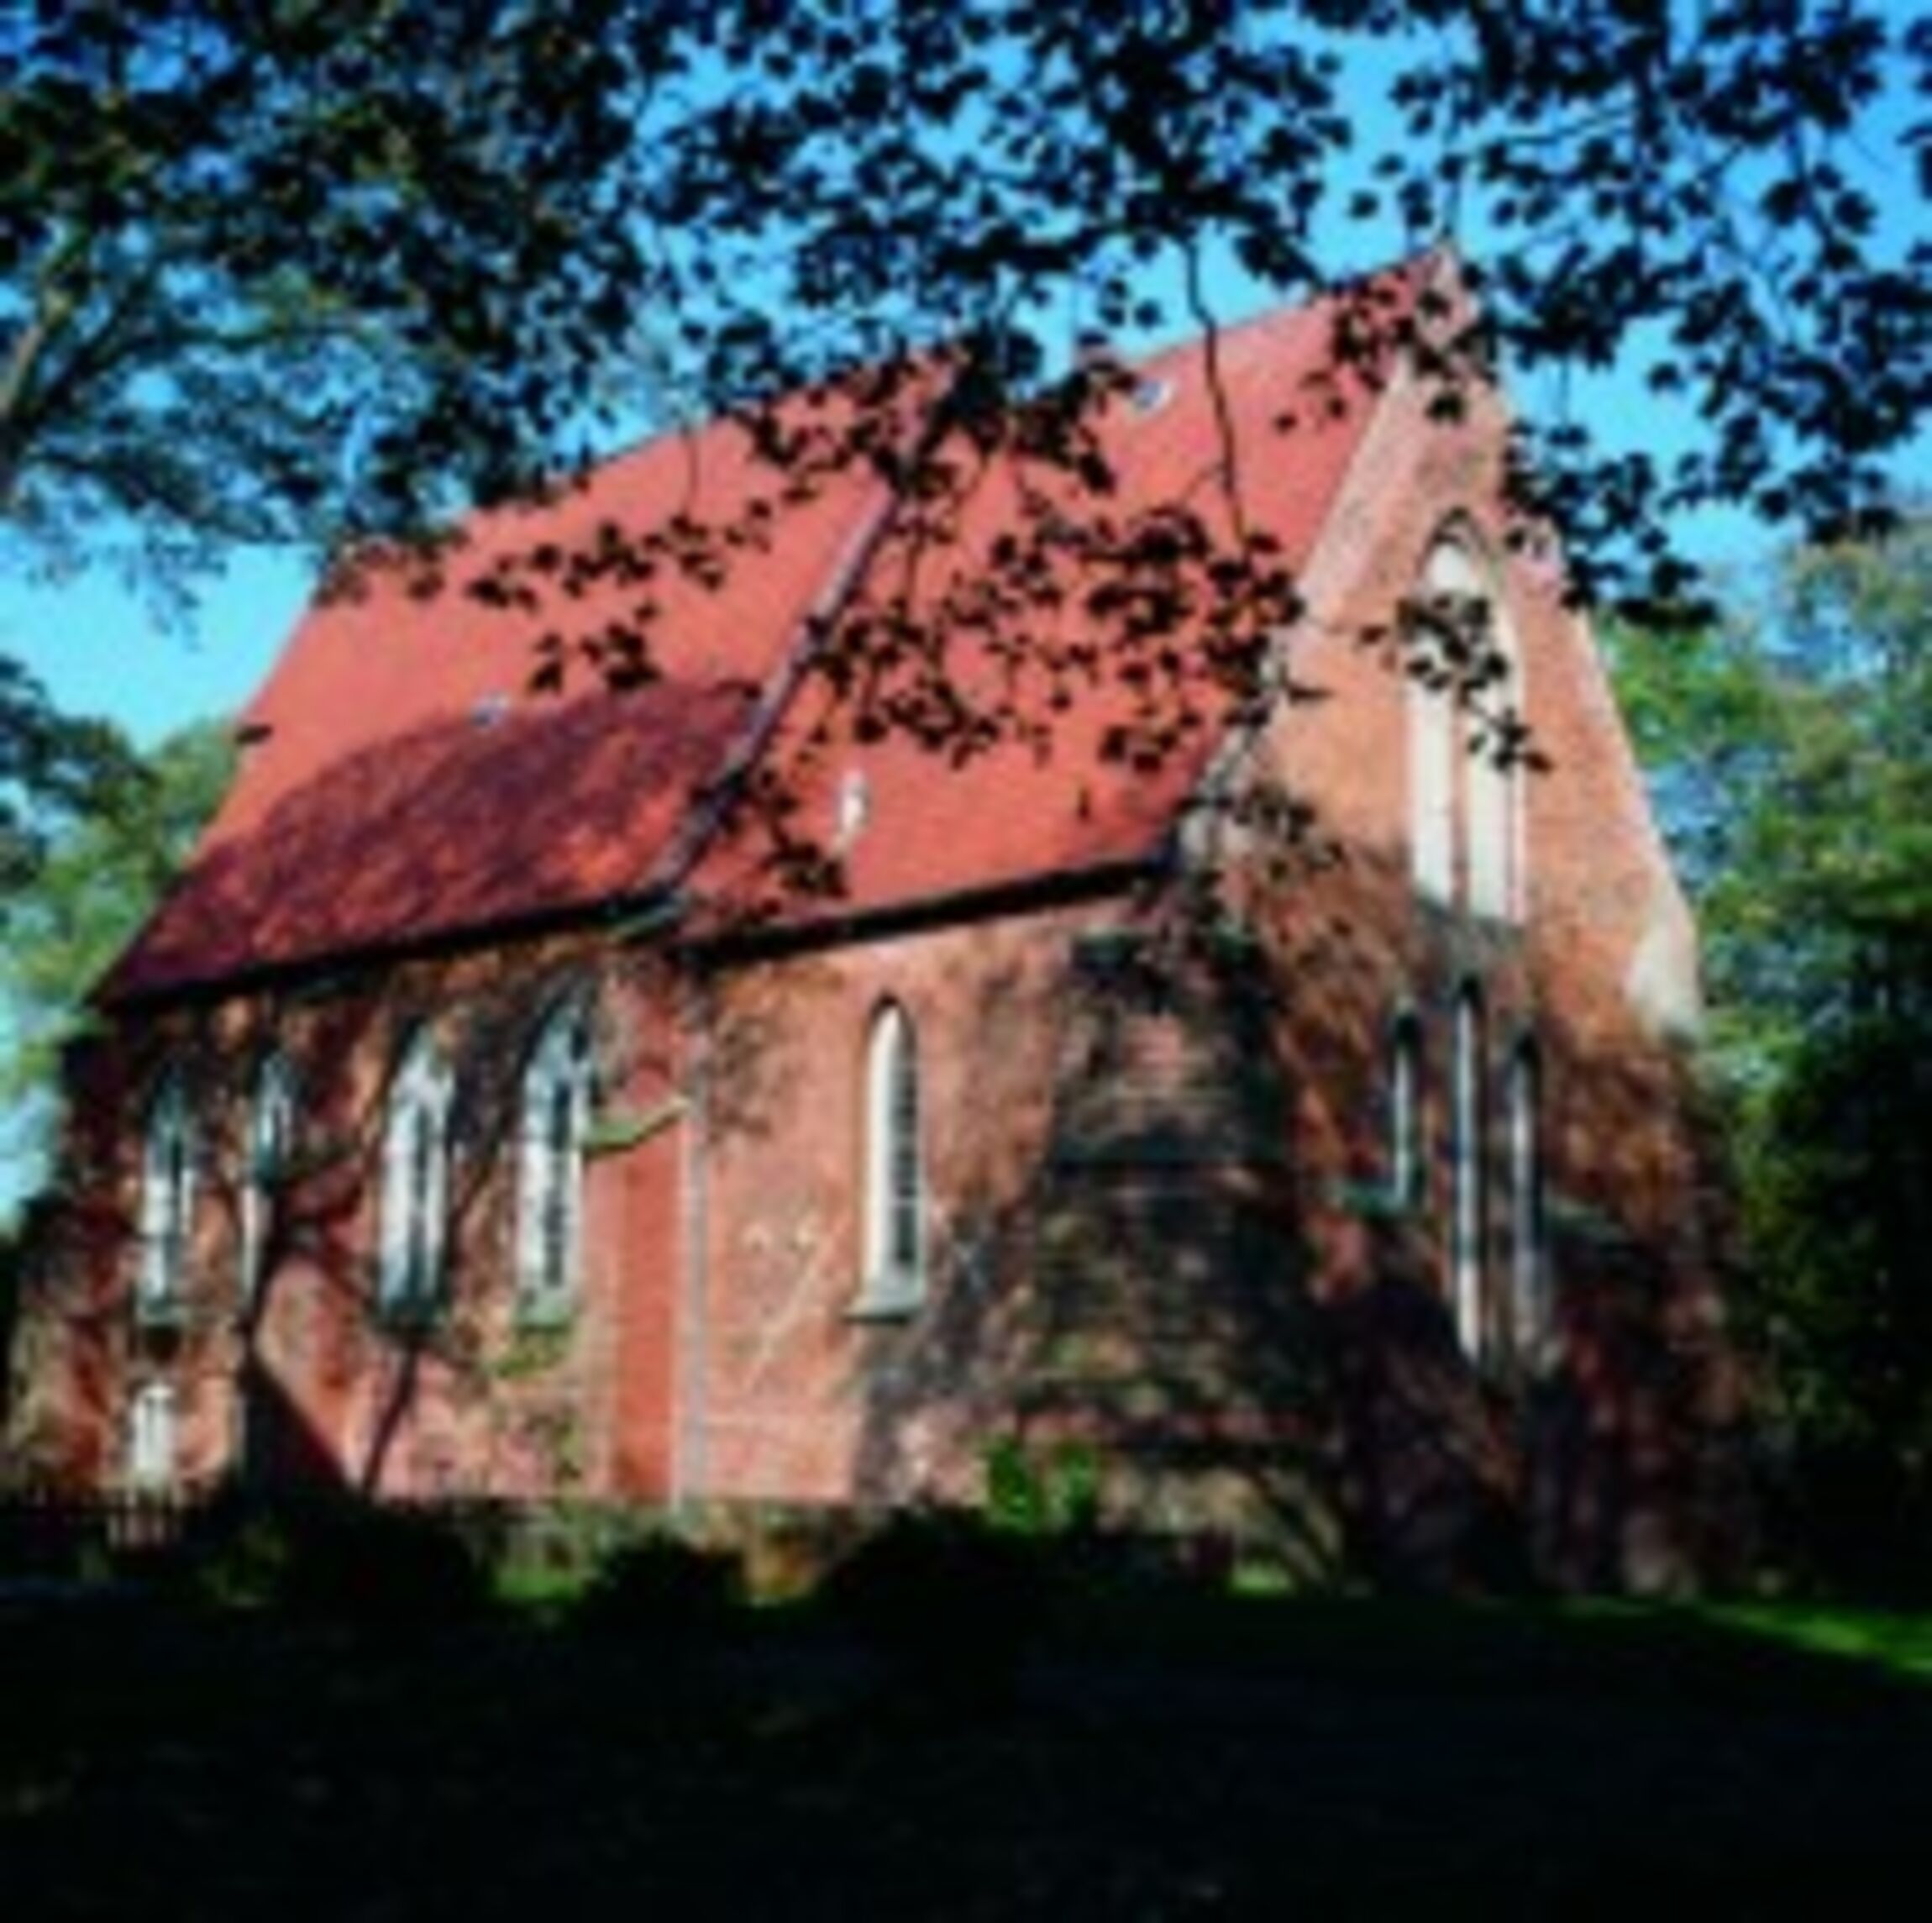 Kirche Heiligenrode